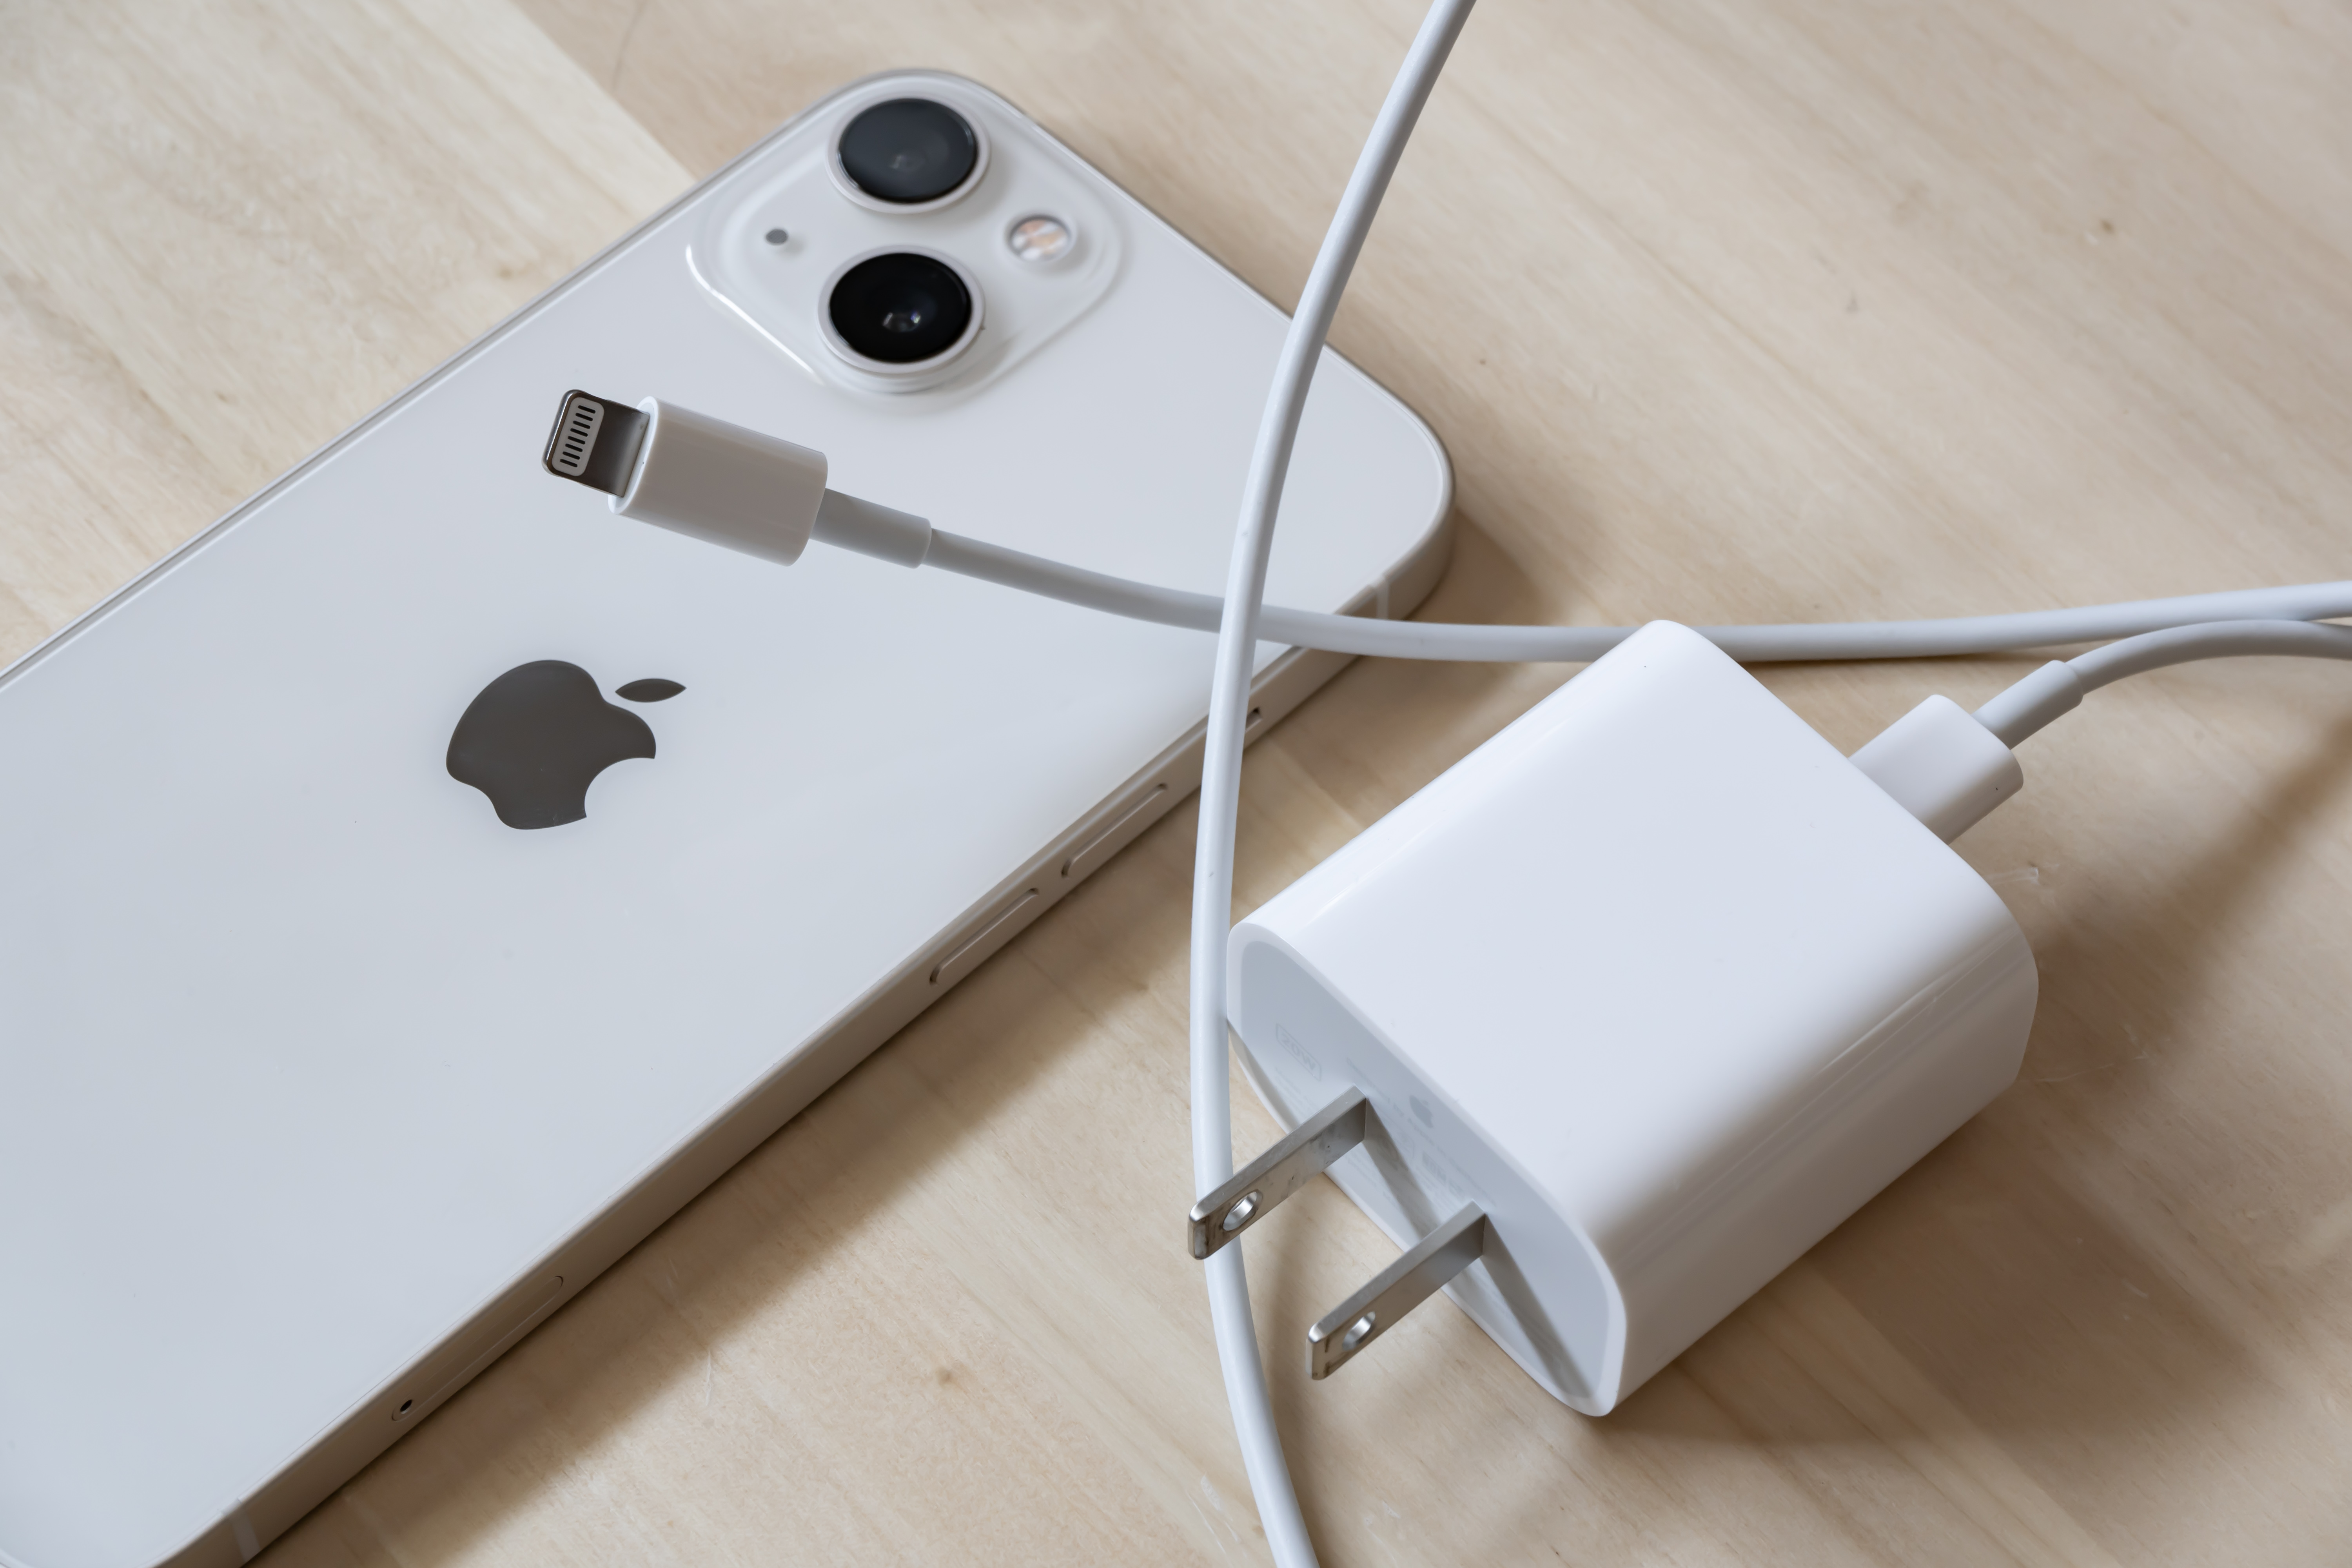 Apple sugere seu primeiro adaptador de energia USB-C de porta dupla